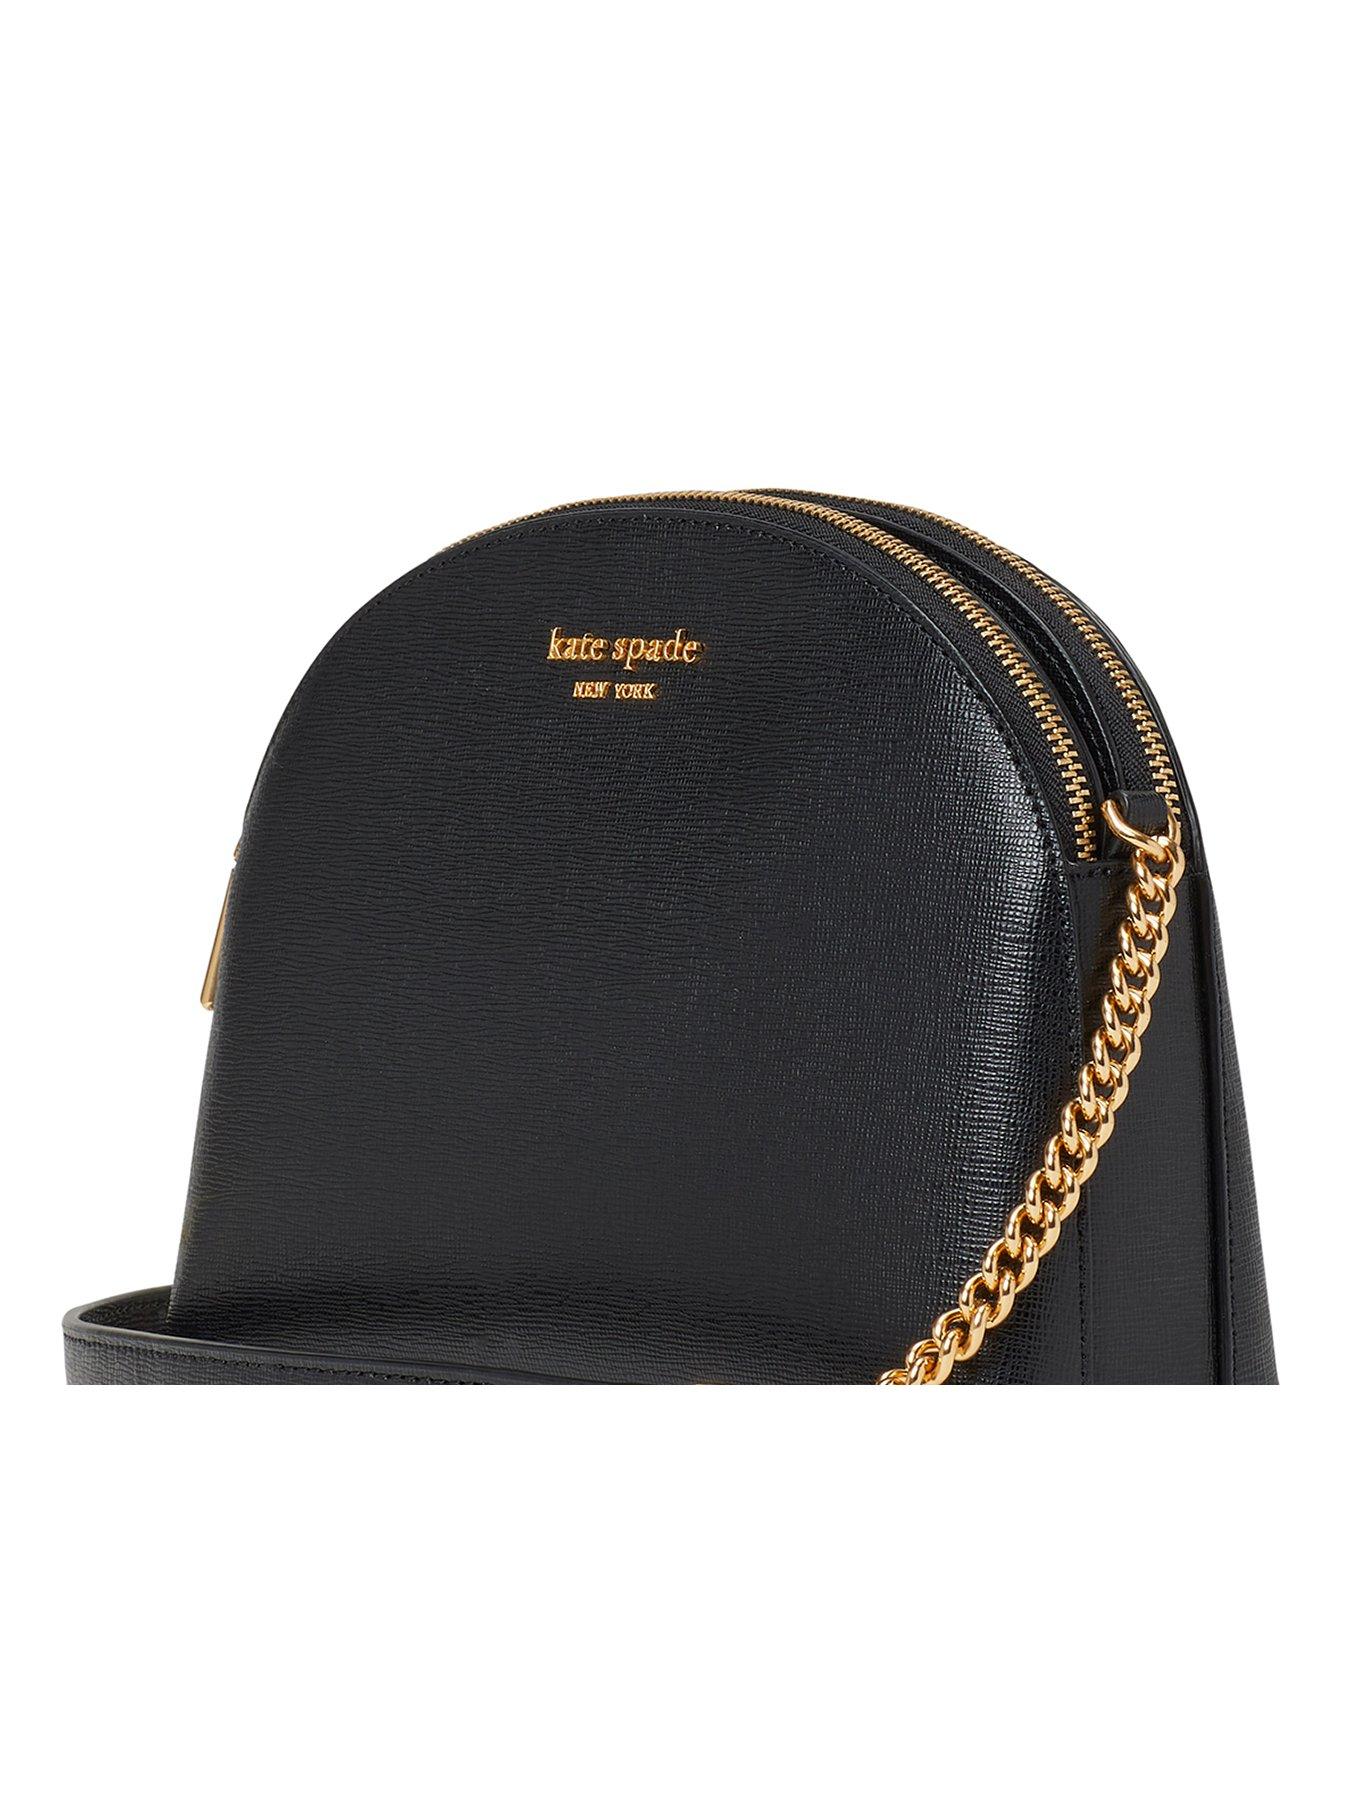 Buy Kate Spade New York Black Morgan Saffiano Leather Dome